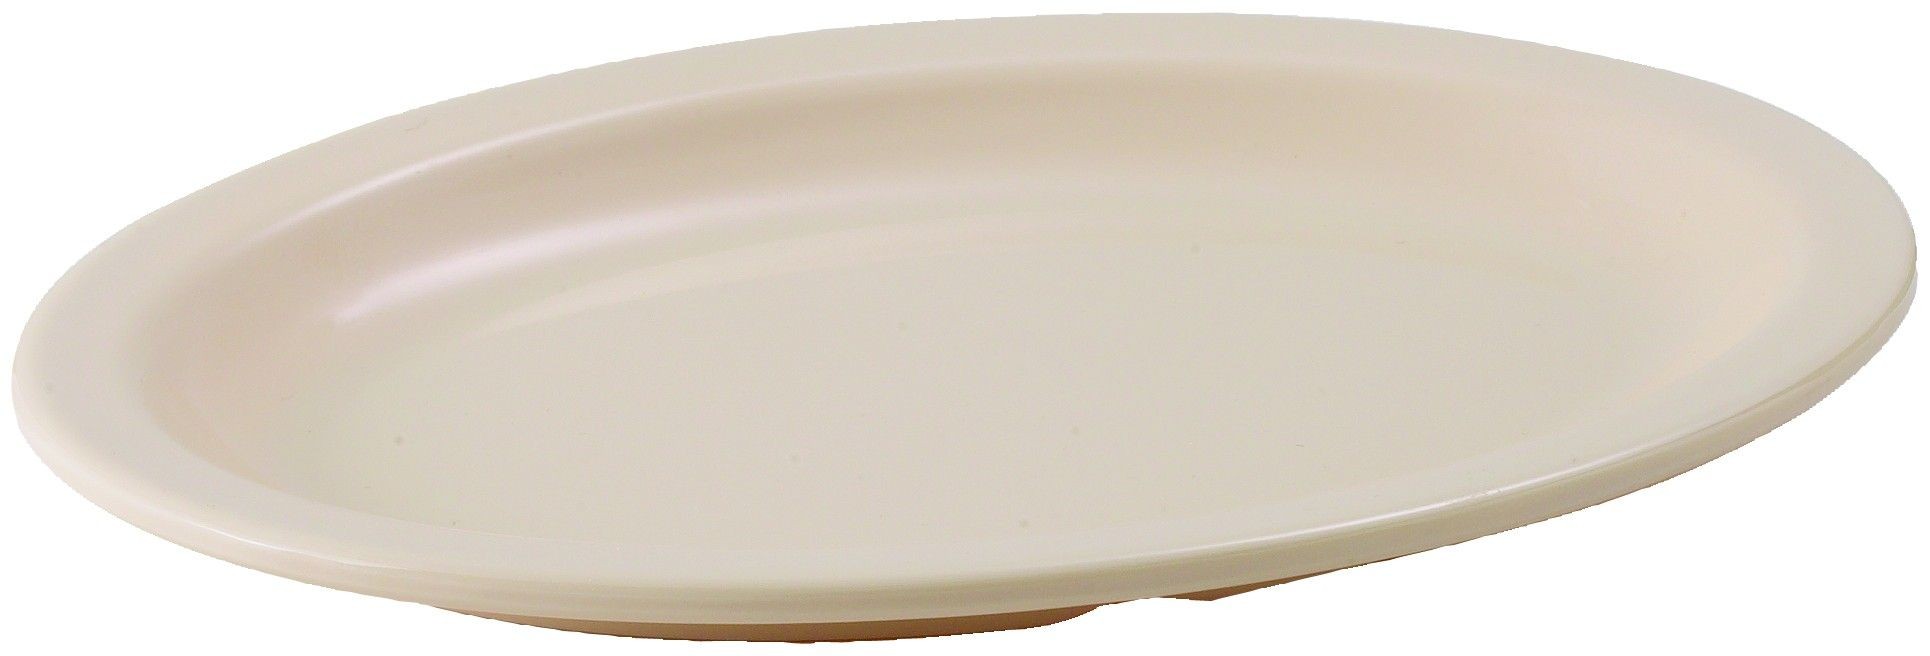 Winco MMPO-96 Tan Melamine 9 3/4" x 6 3/4" Oval Platter with Narrow Rim